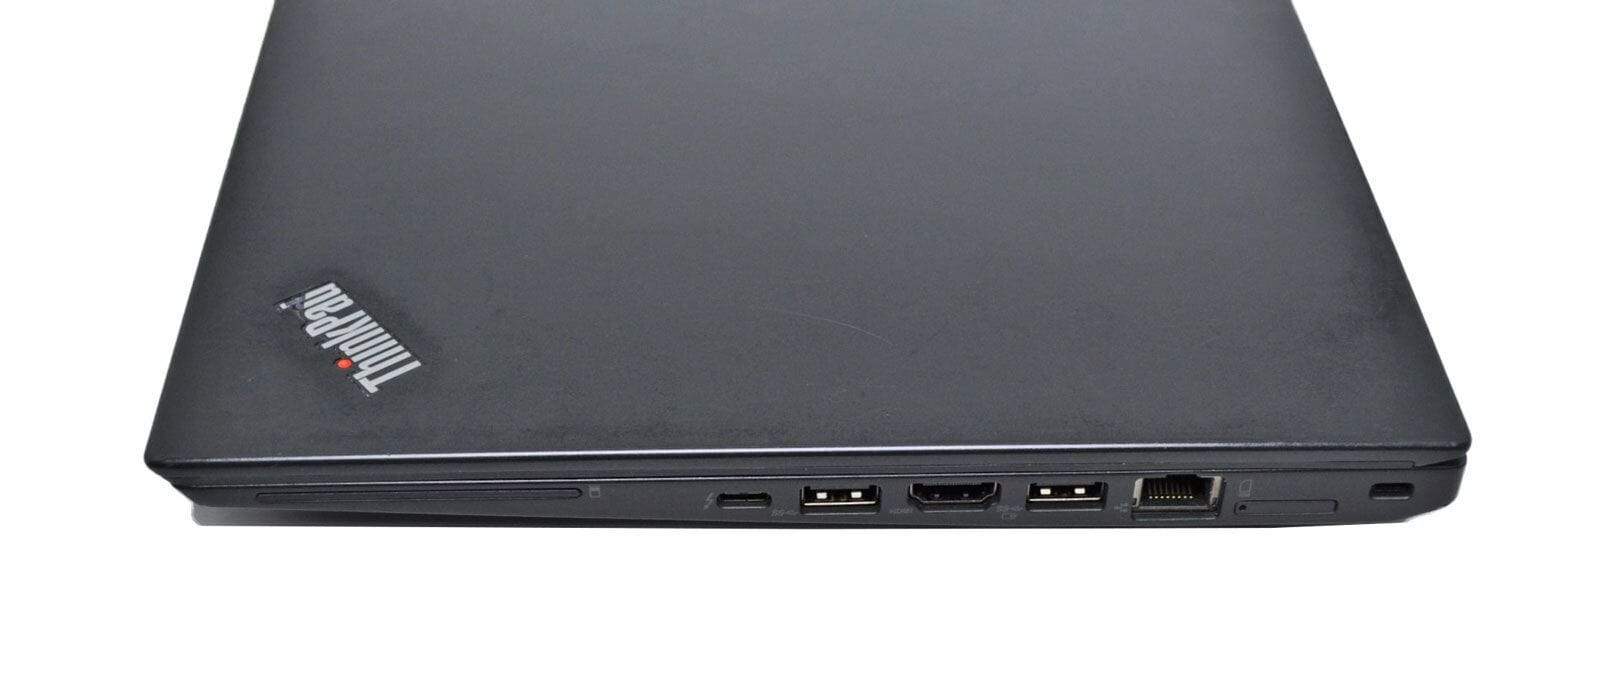 Lenovo Thinkpad T470S Touch UltraBook: 1TB SSD, Core i7-7600U, 12GB RAM Warranty - CruiseTech